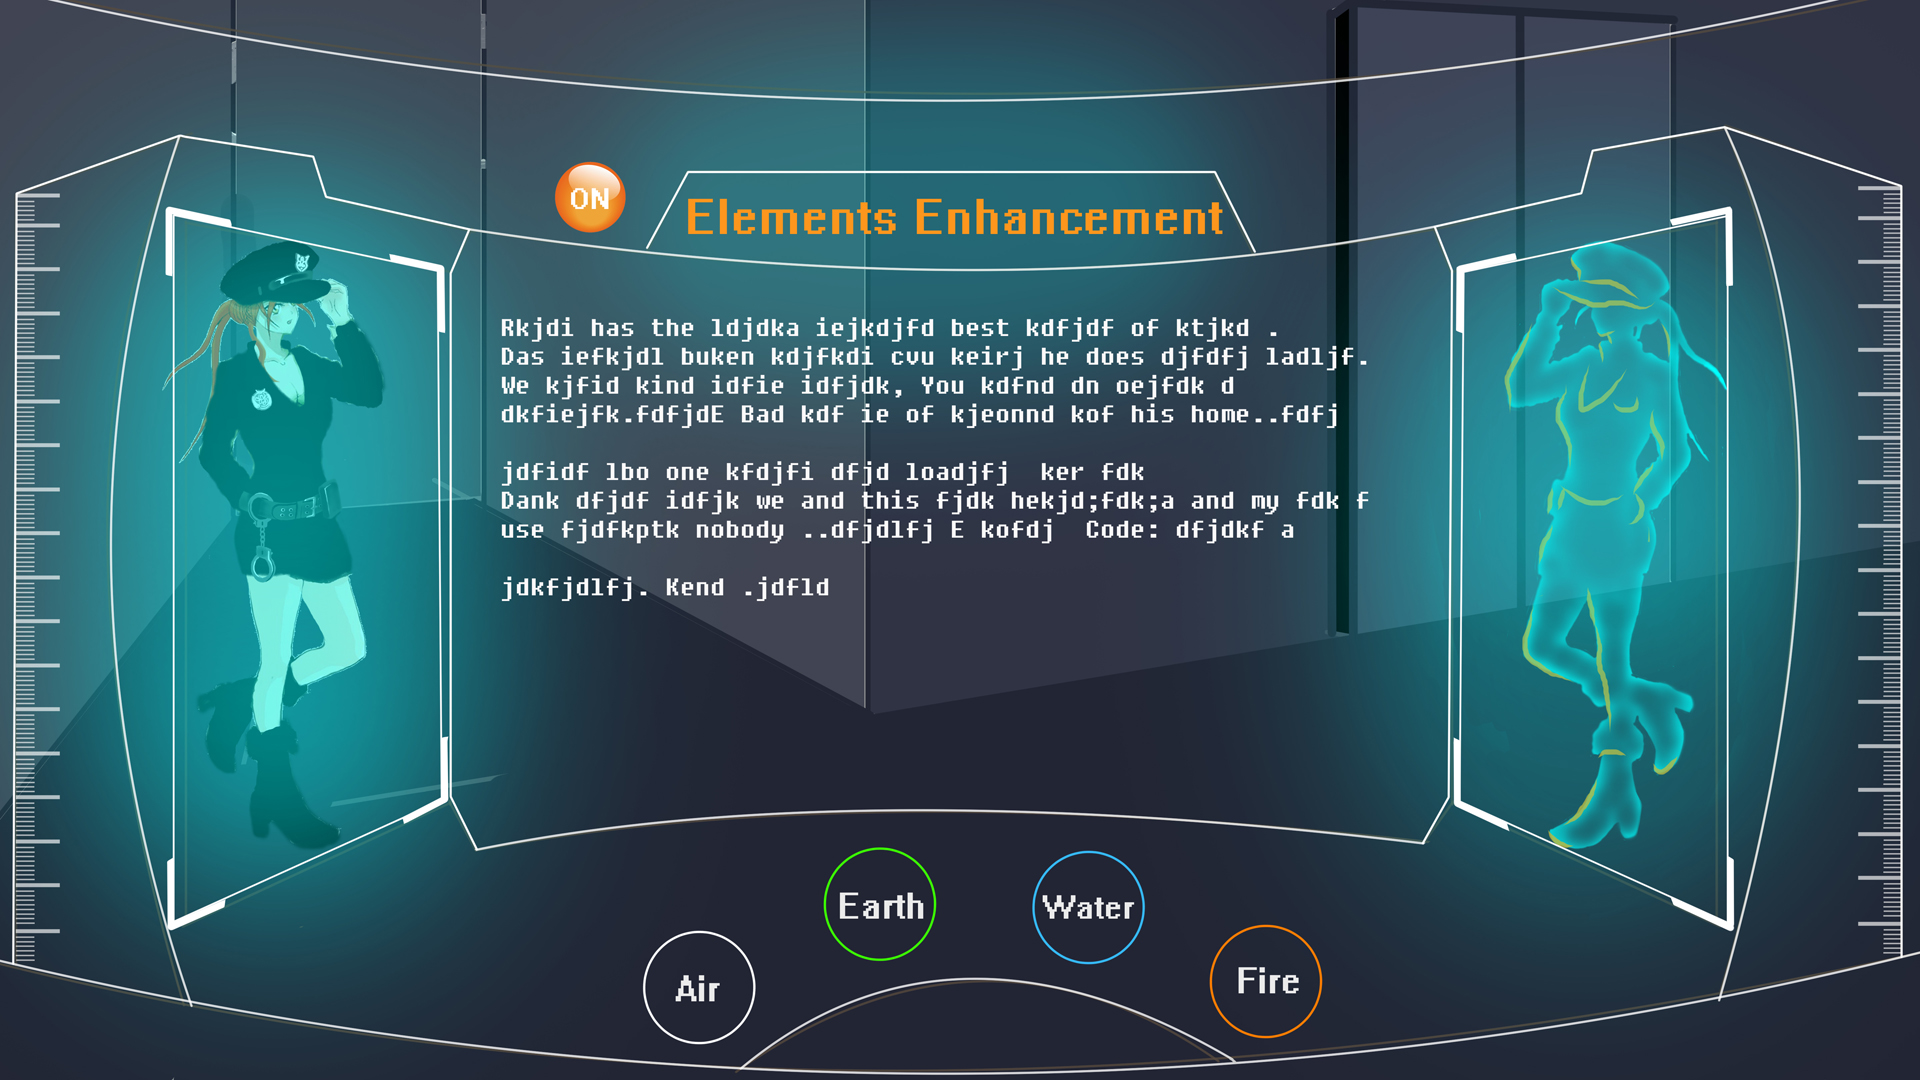 Elements Enhancement